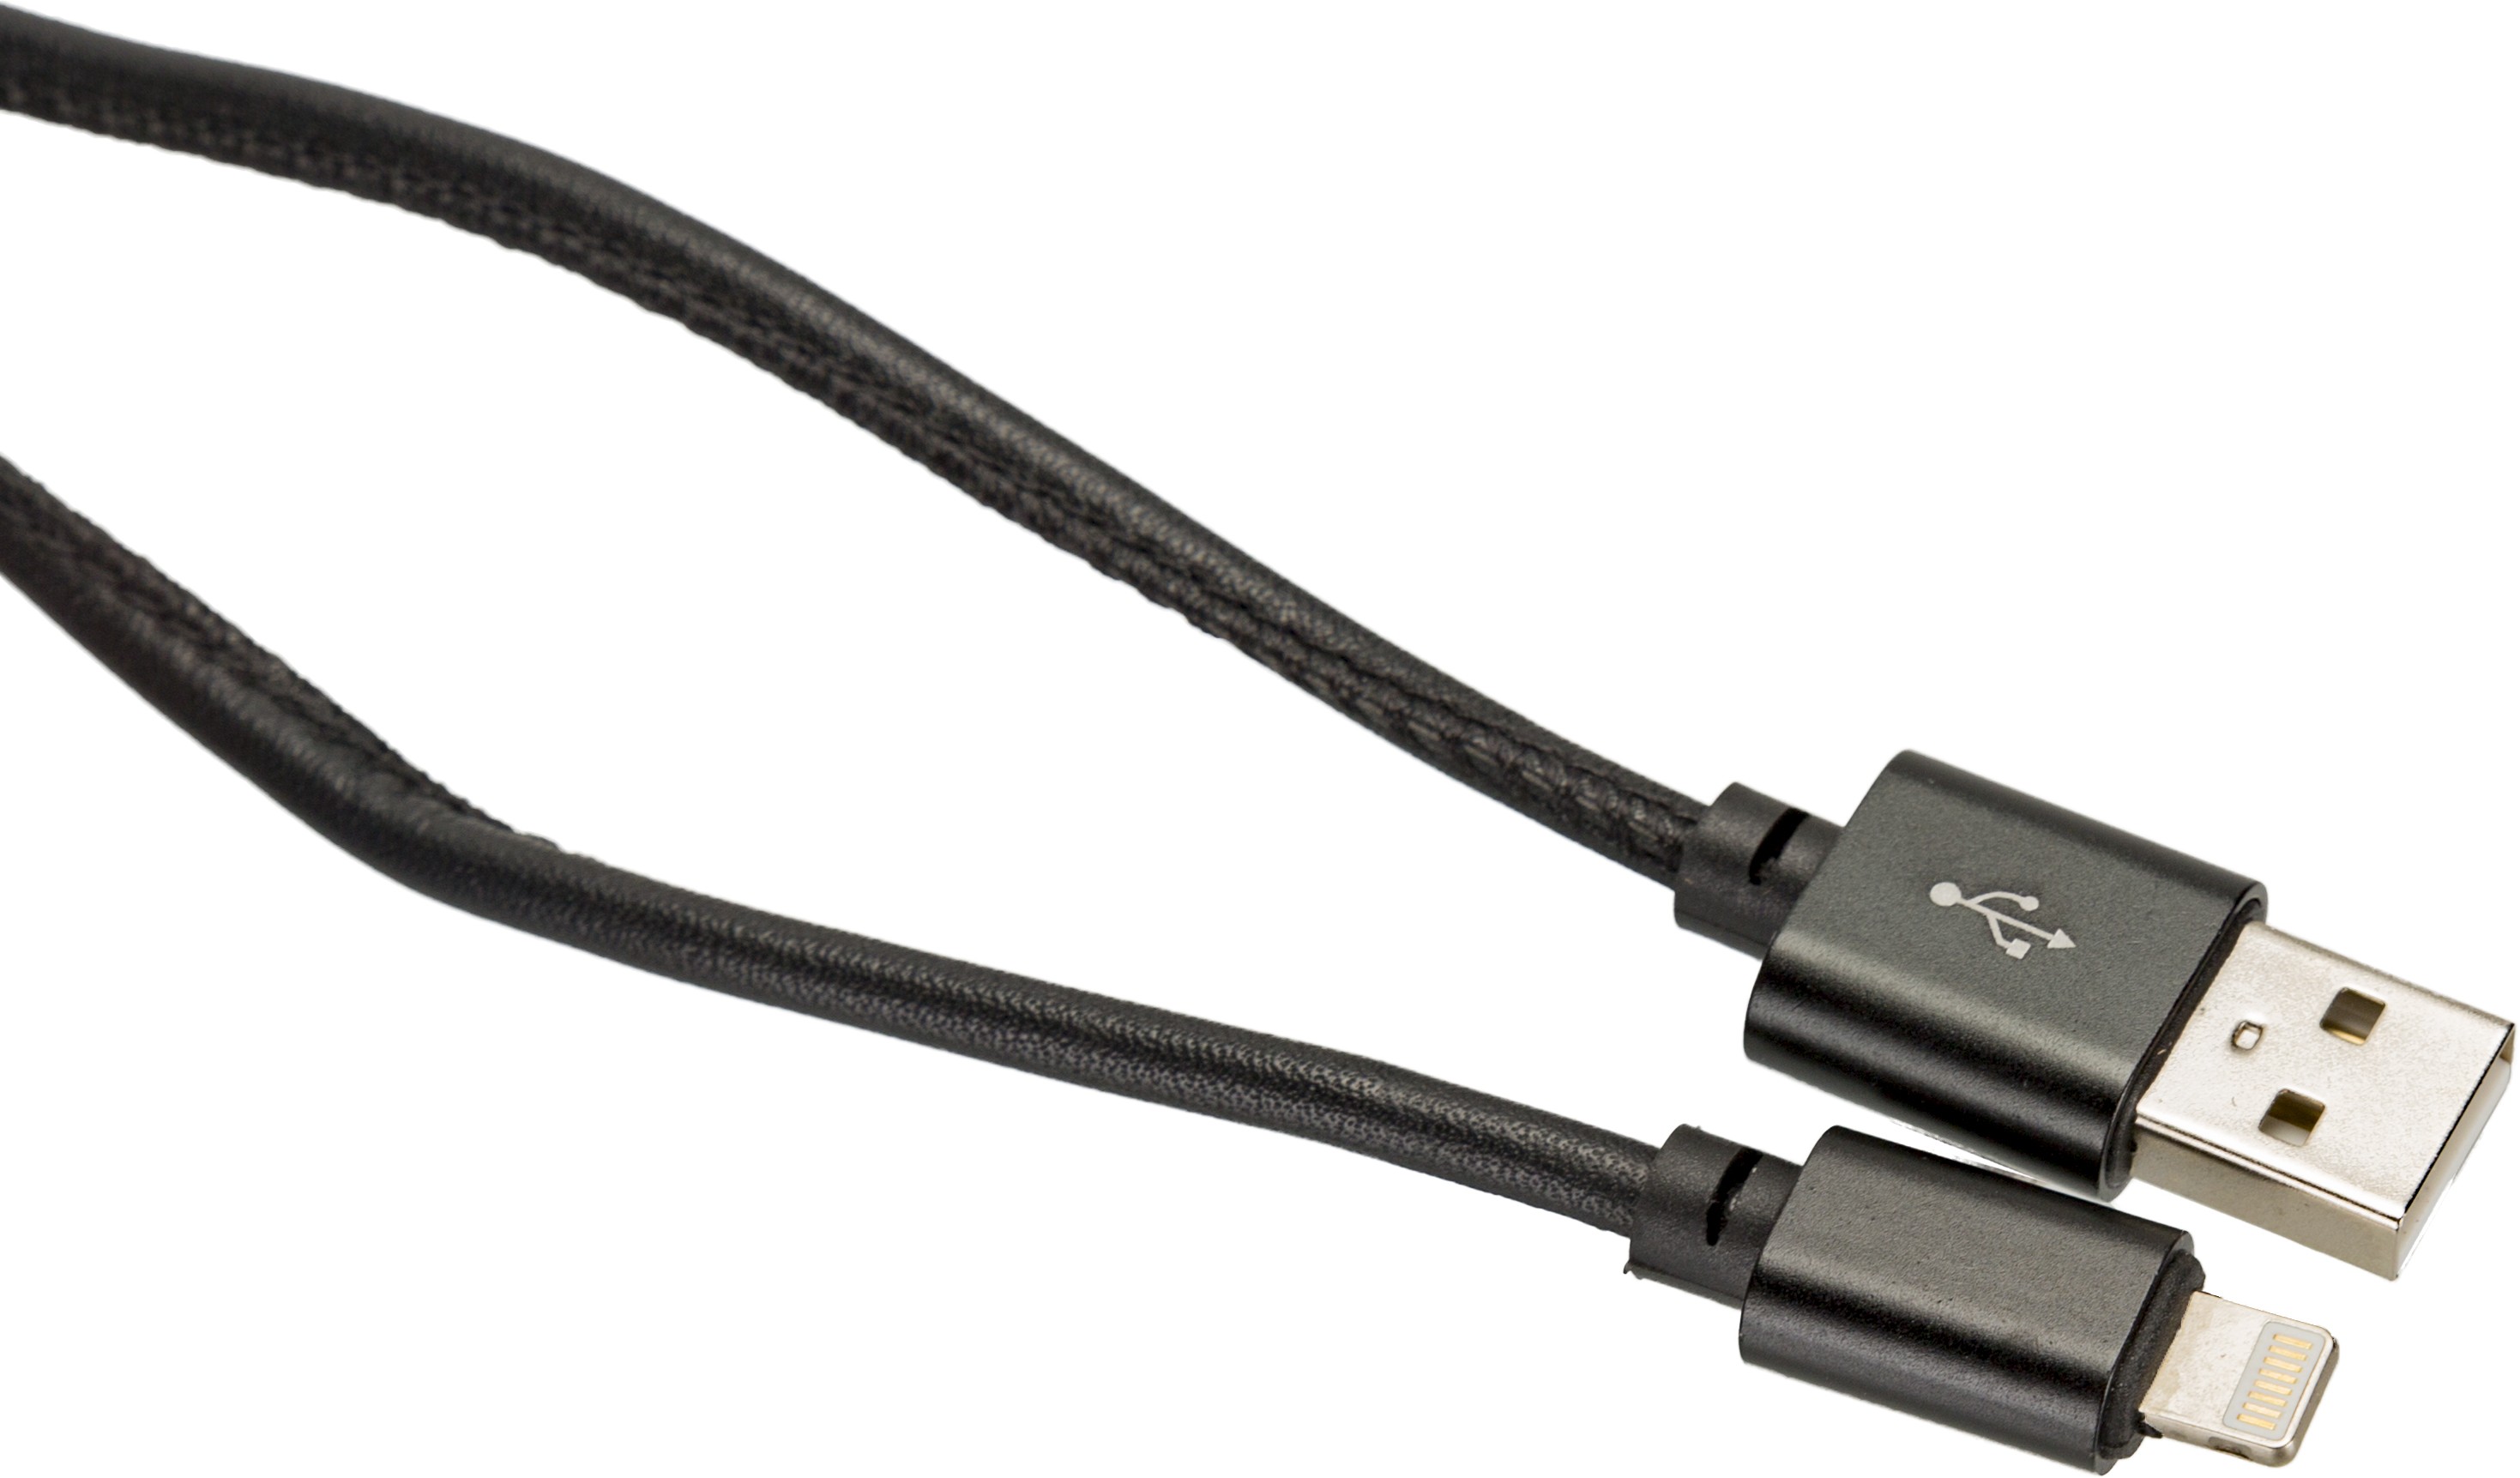 Platinet kaabel USB - Lightning 1m, must